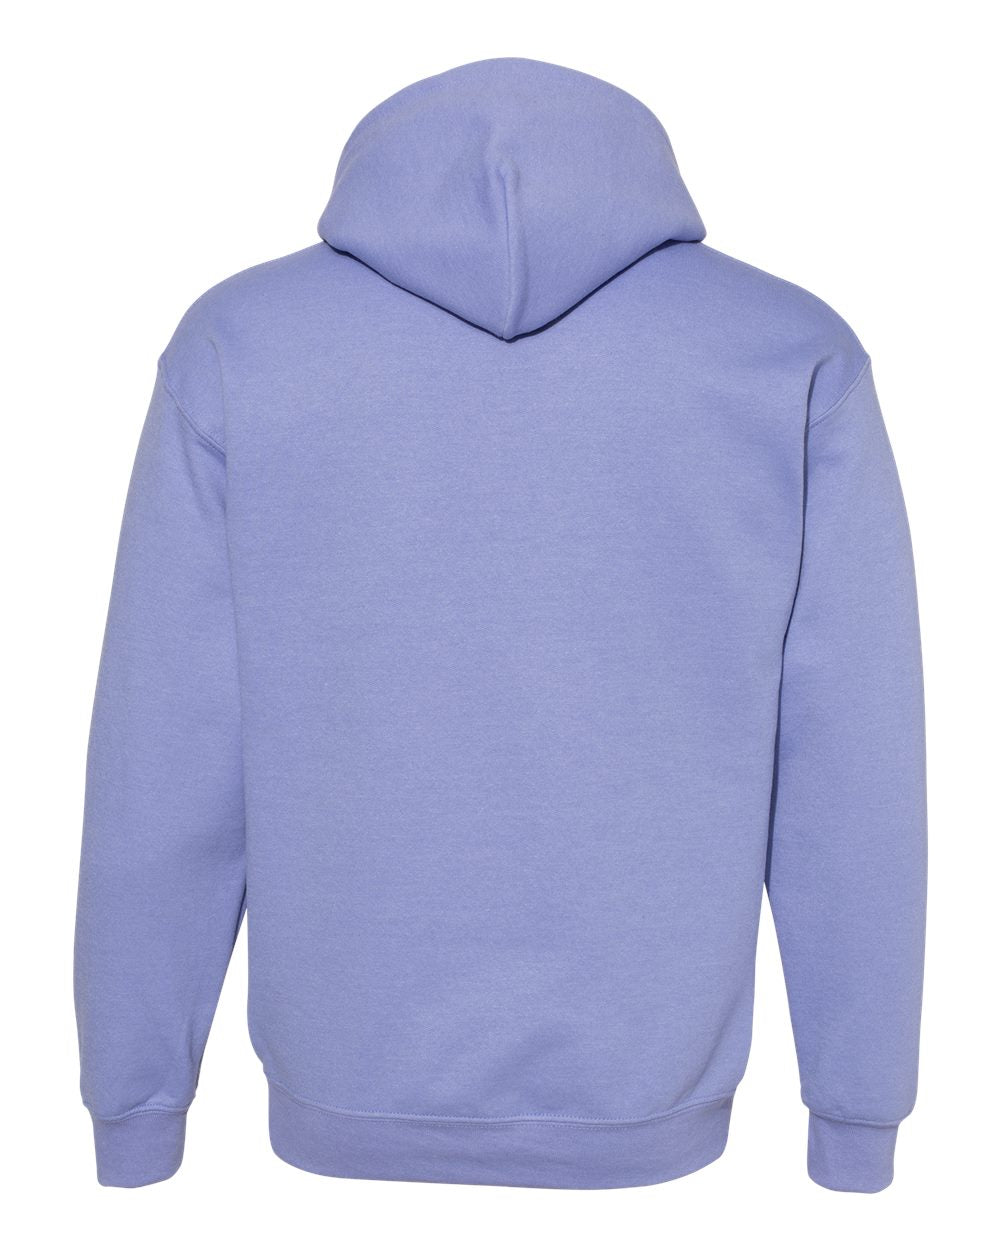 Gildan Adult Hooded Sweatshirt - Violet